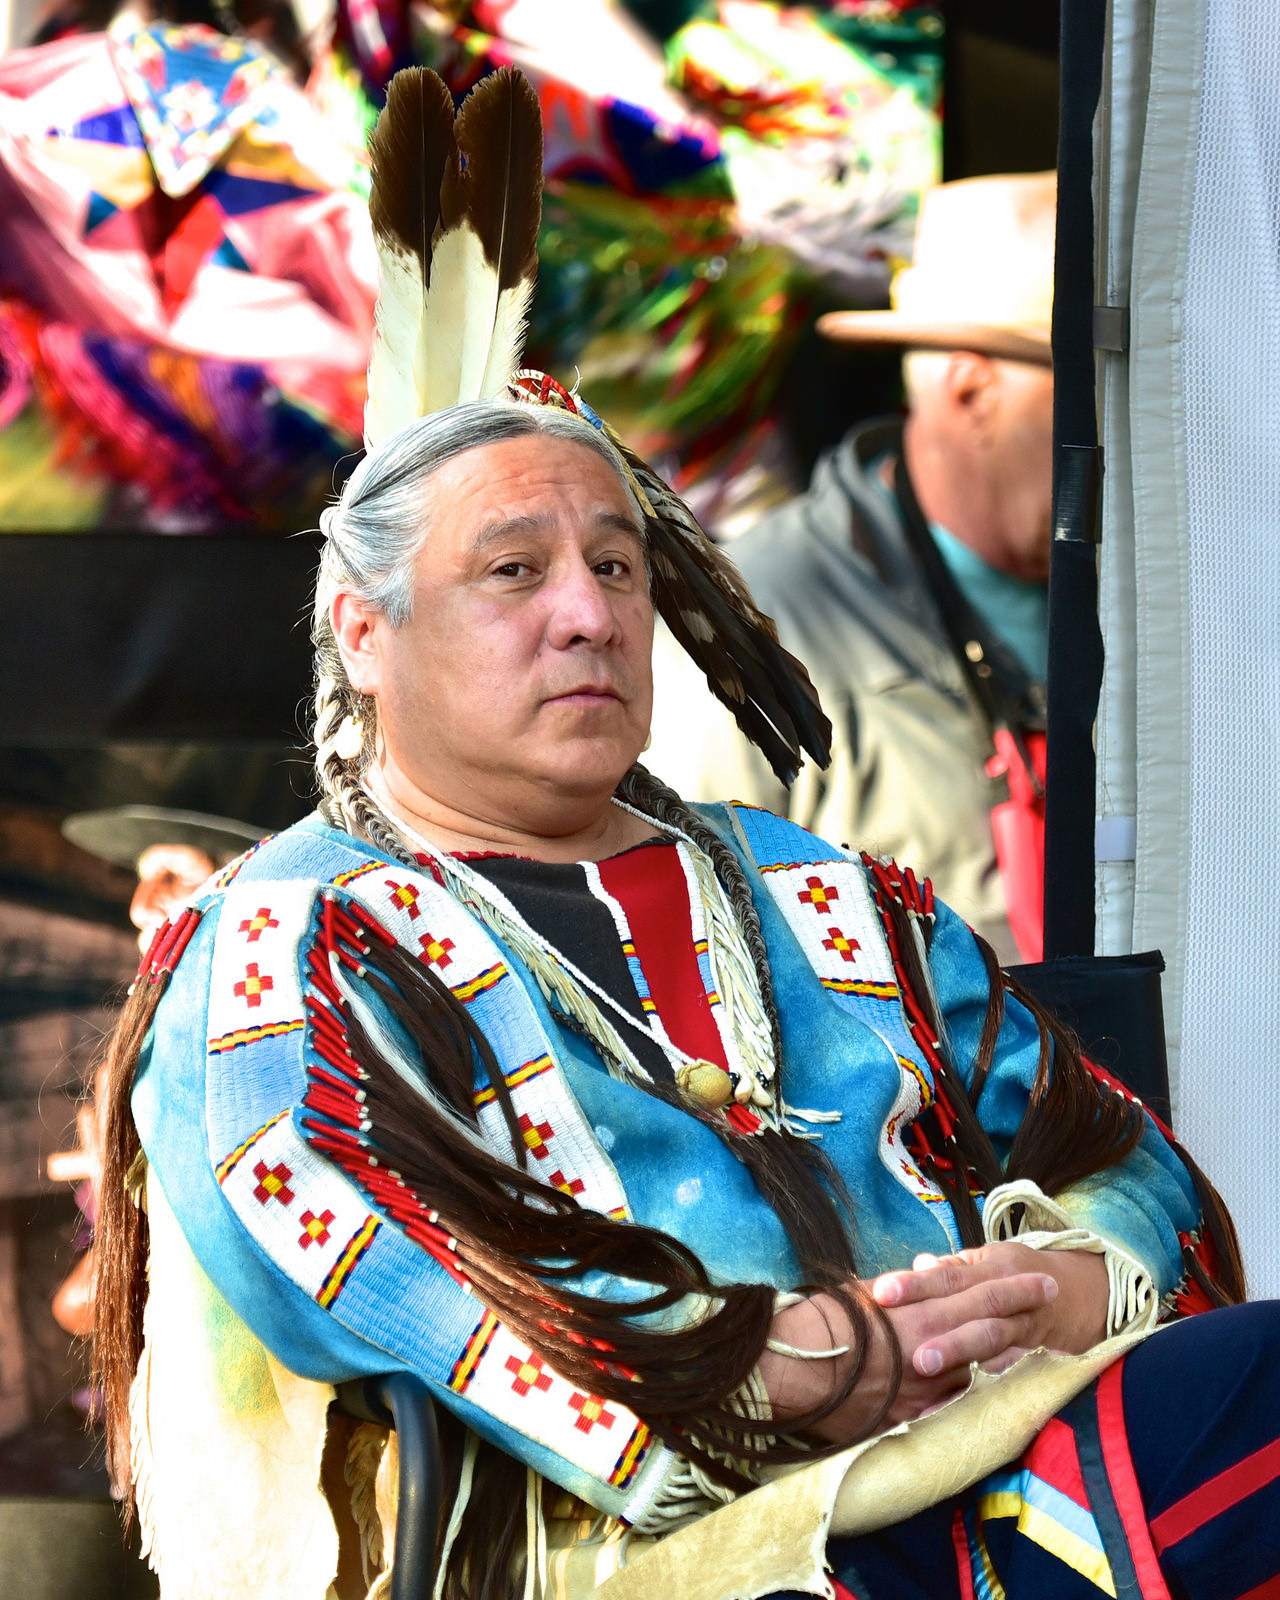 native american clothing1 Native American Clothing Contest at Santa Fe Indian Market